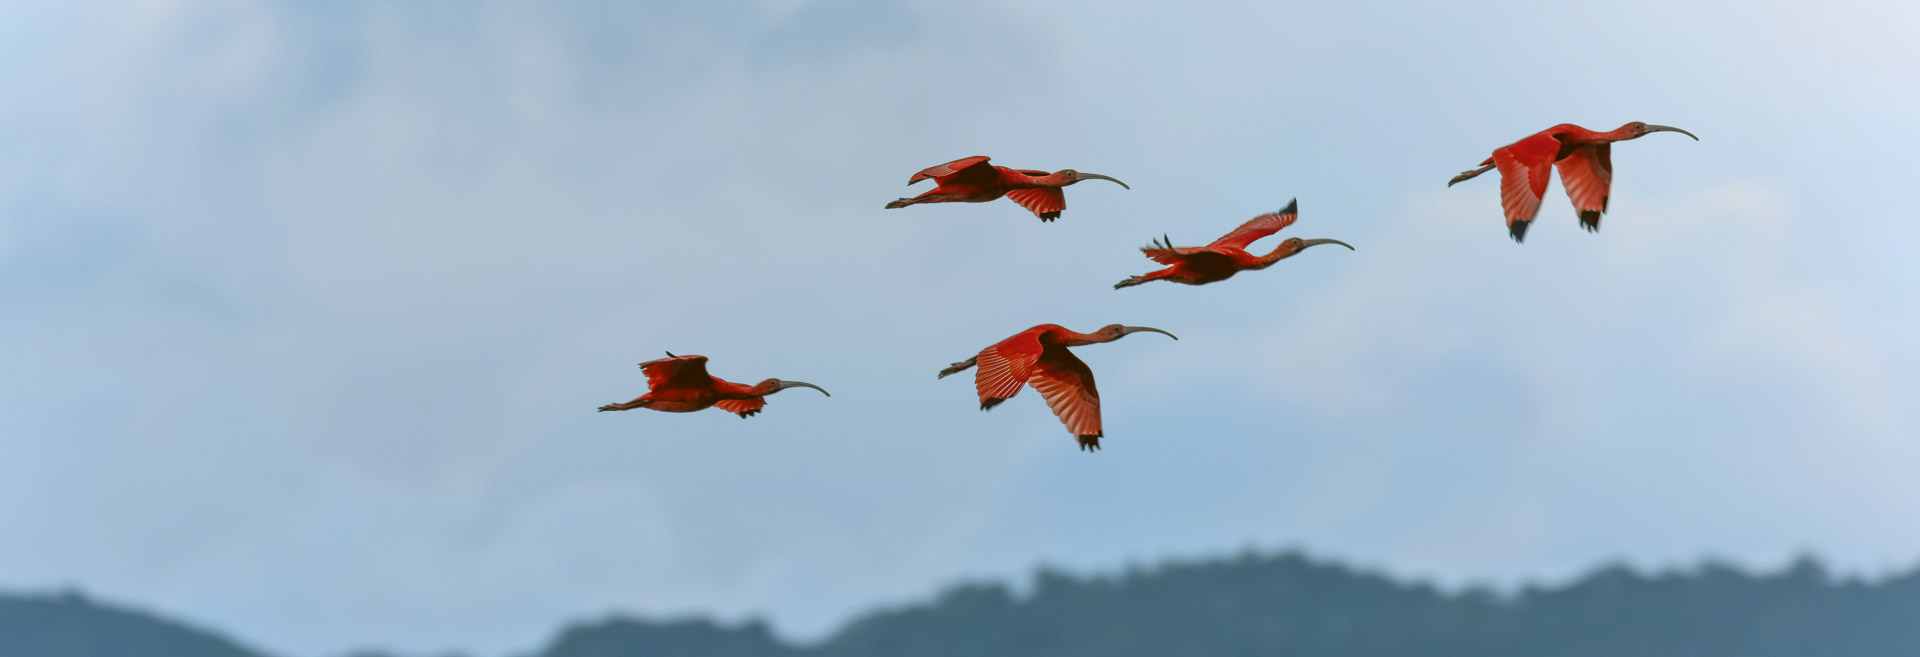 flamingos flying through the air